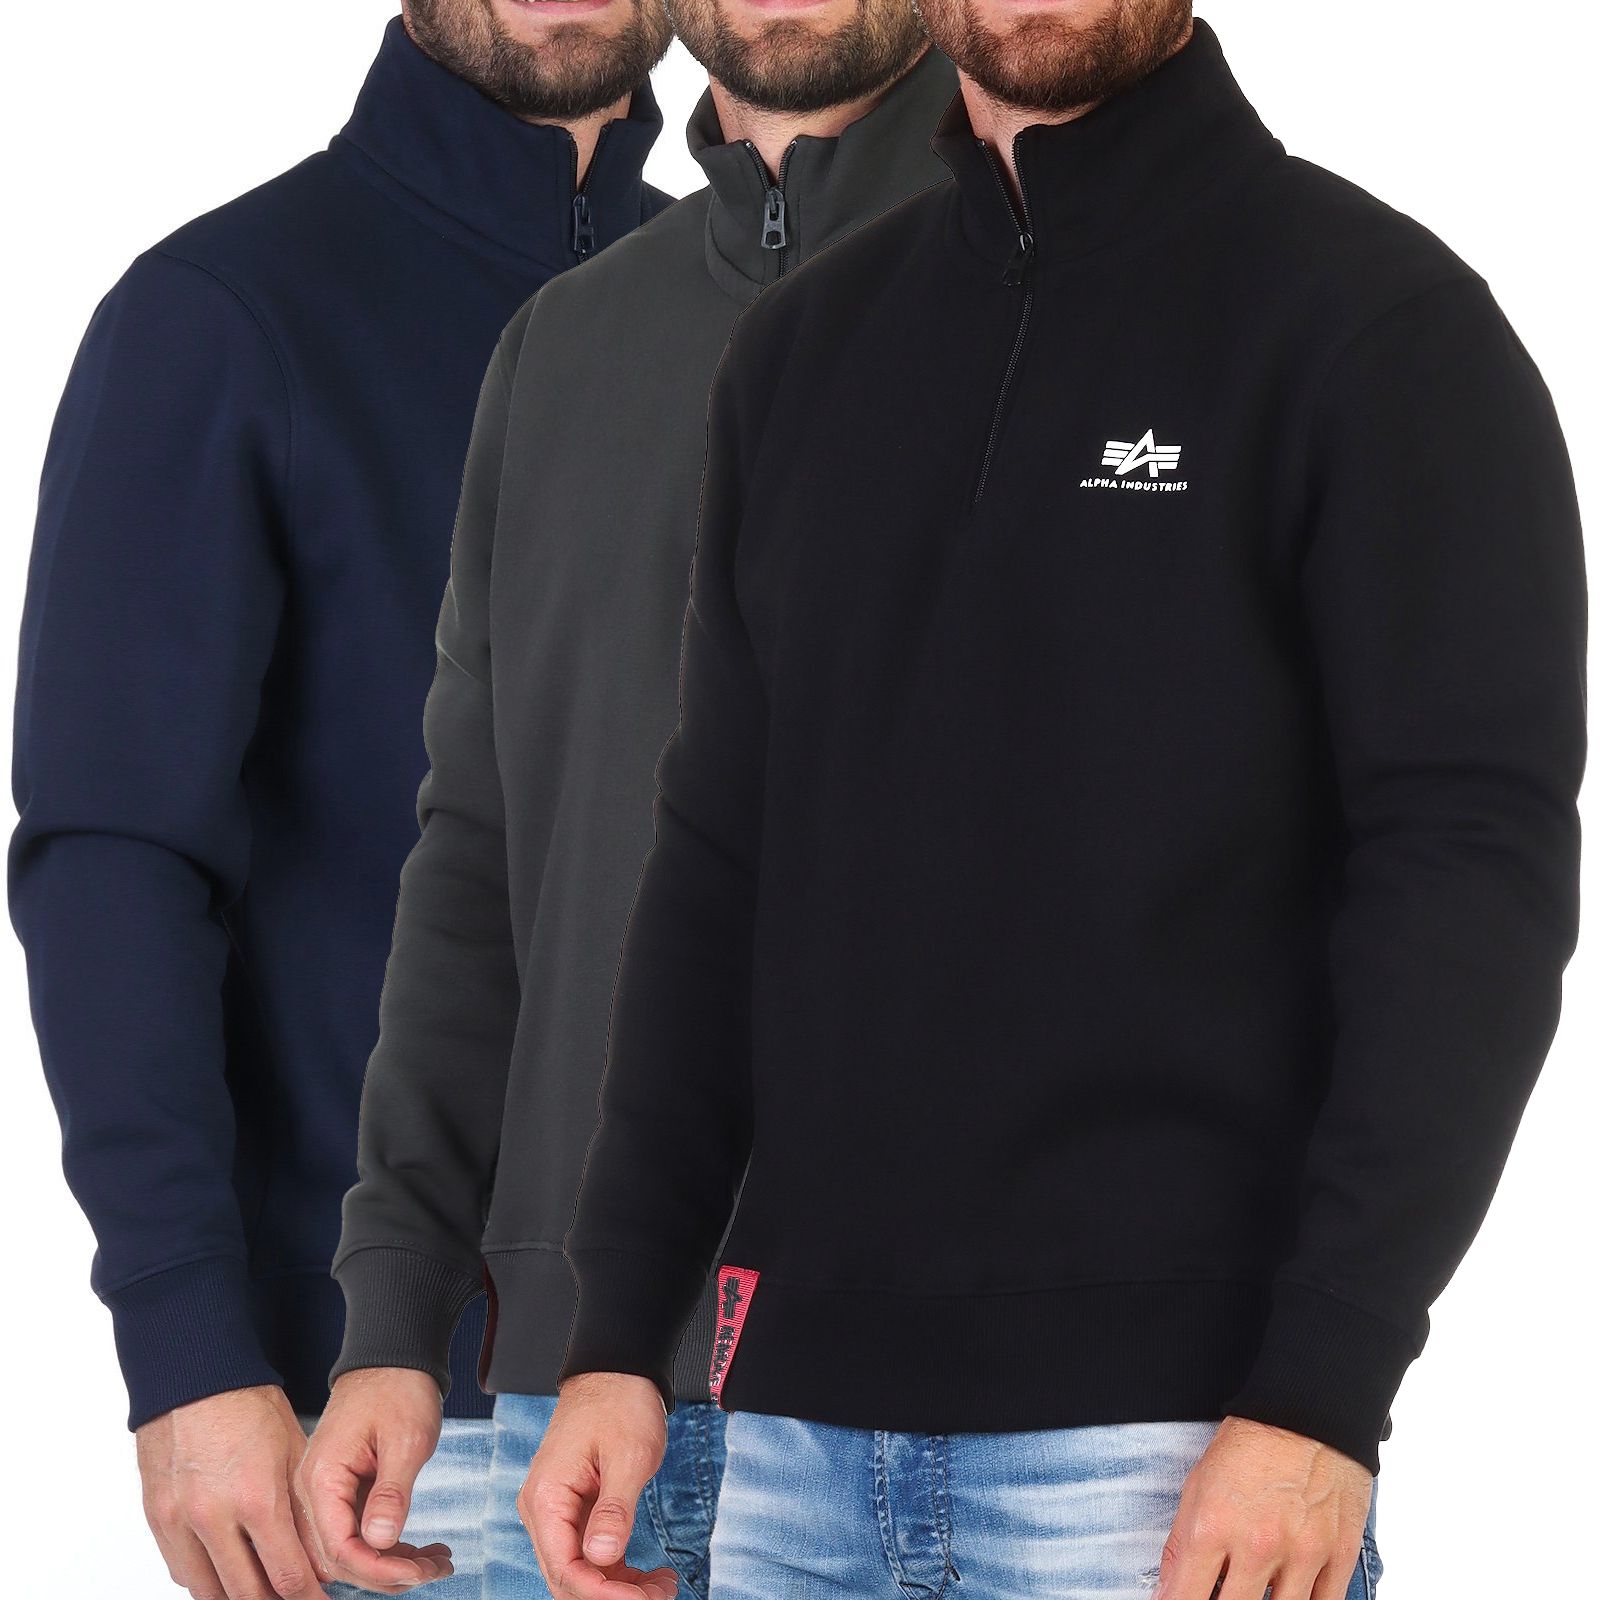 Alpha Alpha Half Marken Sweatshirt Lifestyle | SL Industries Sweater Zip Industries Company L.E.M.B. Herren | | 108308